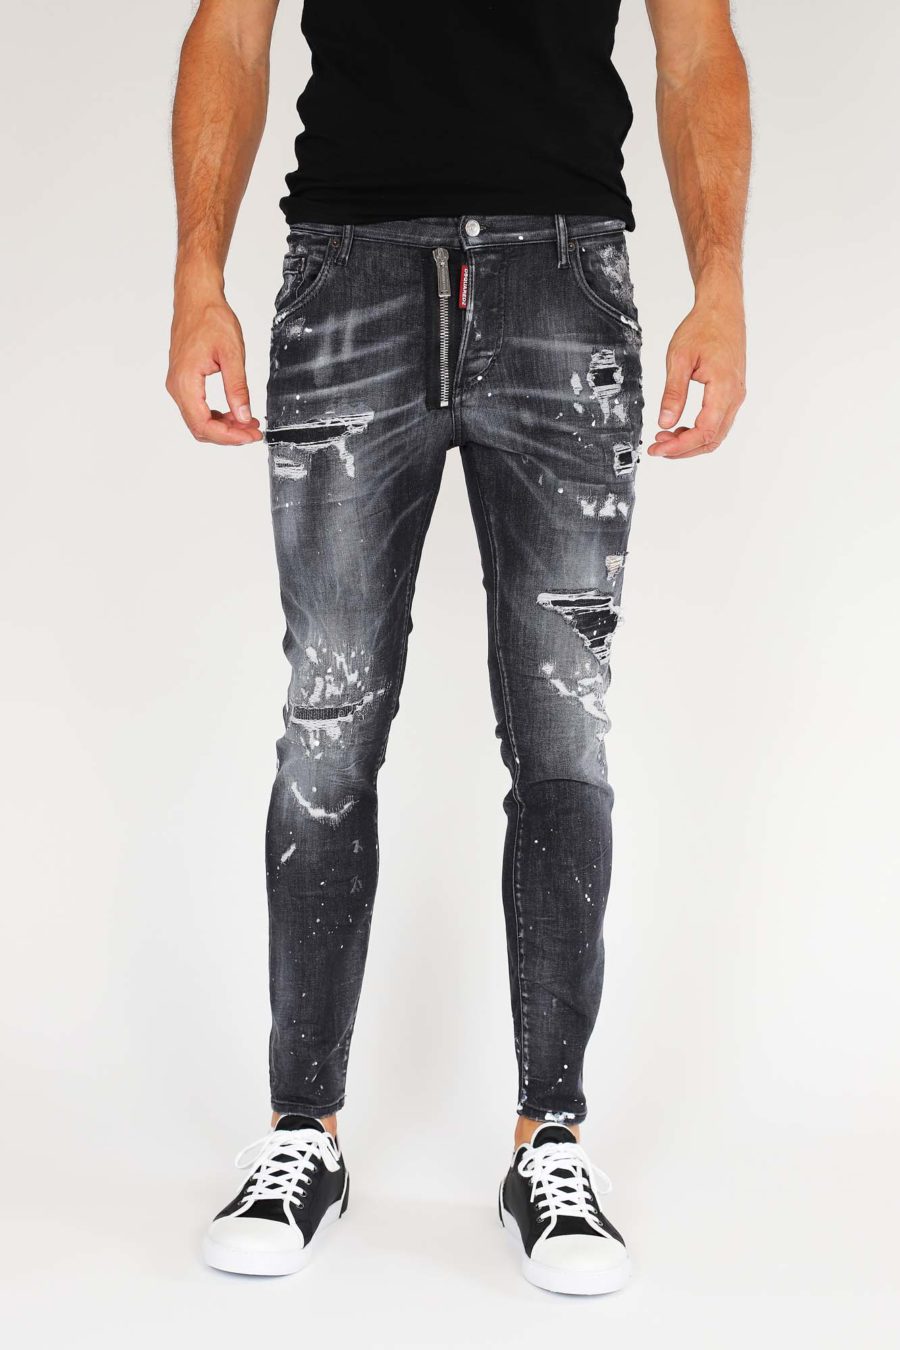 Jeans "Super Twinky Jean" mit Reißverschluss - IMG 9857